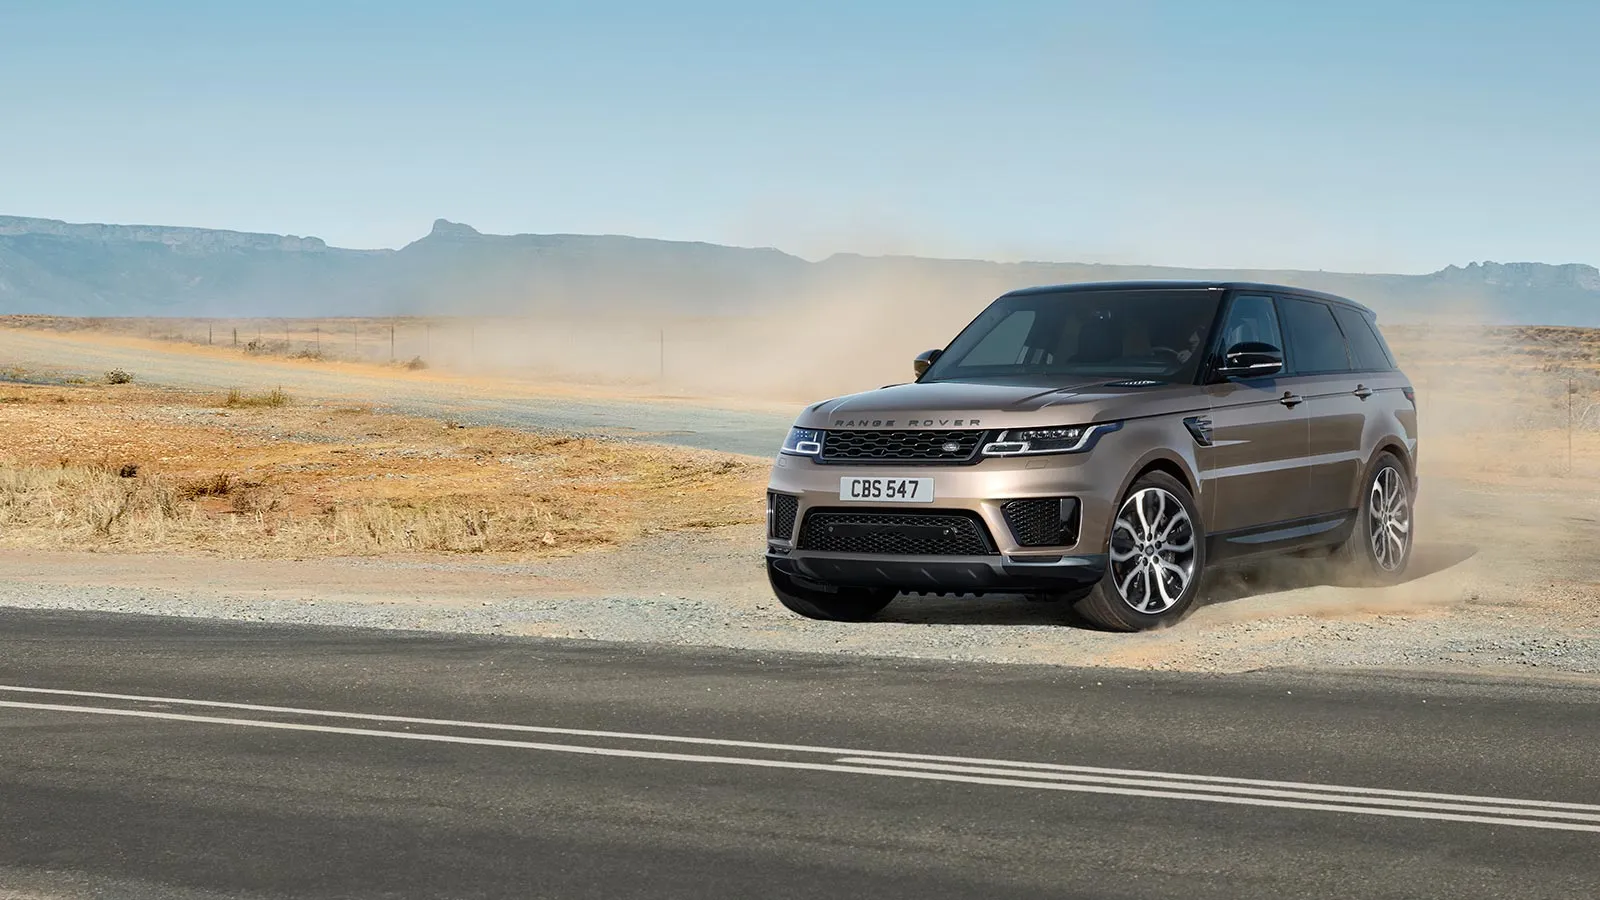 Range Rover driving across dusty dirt road